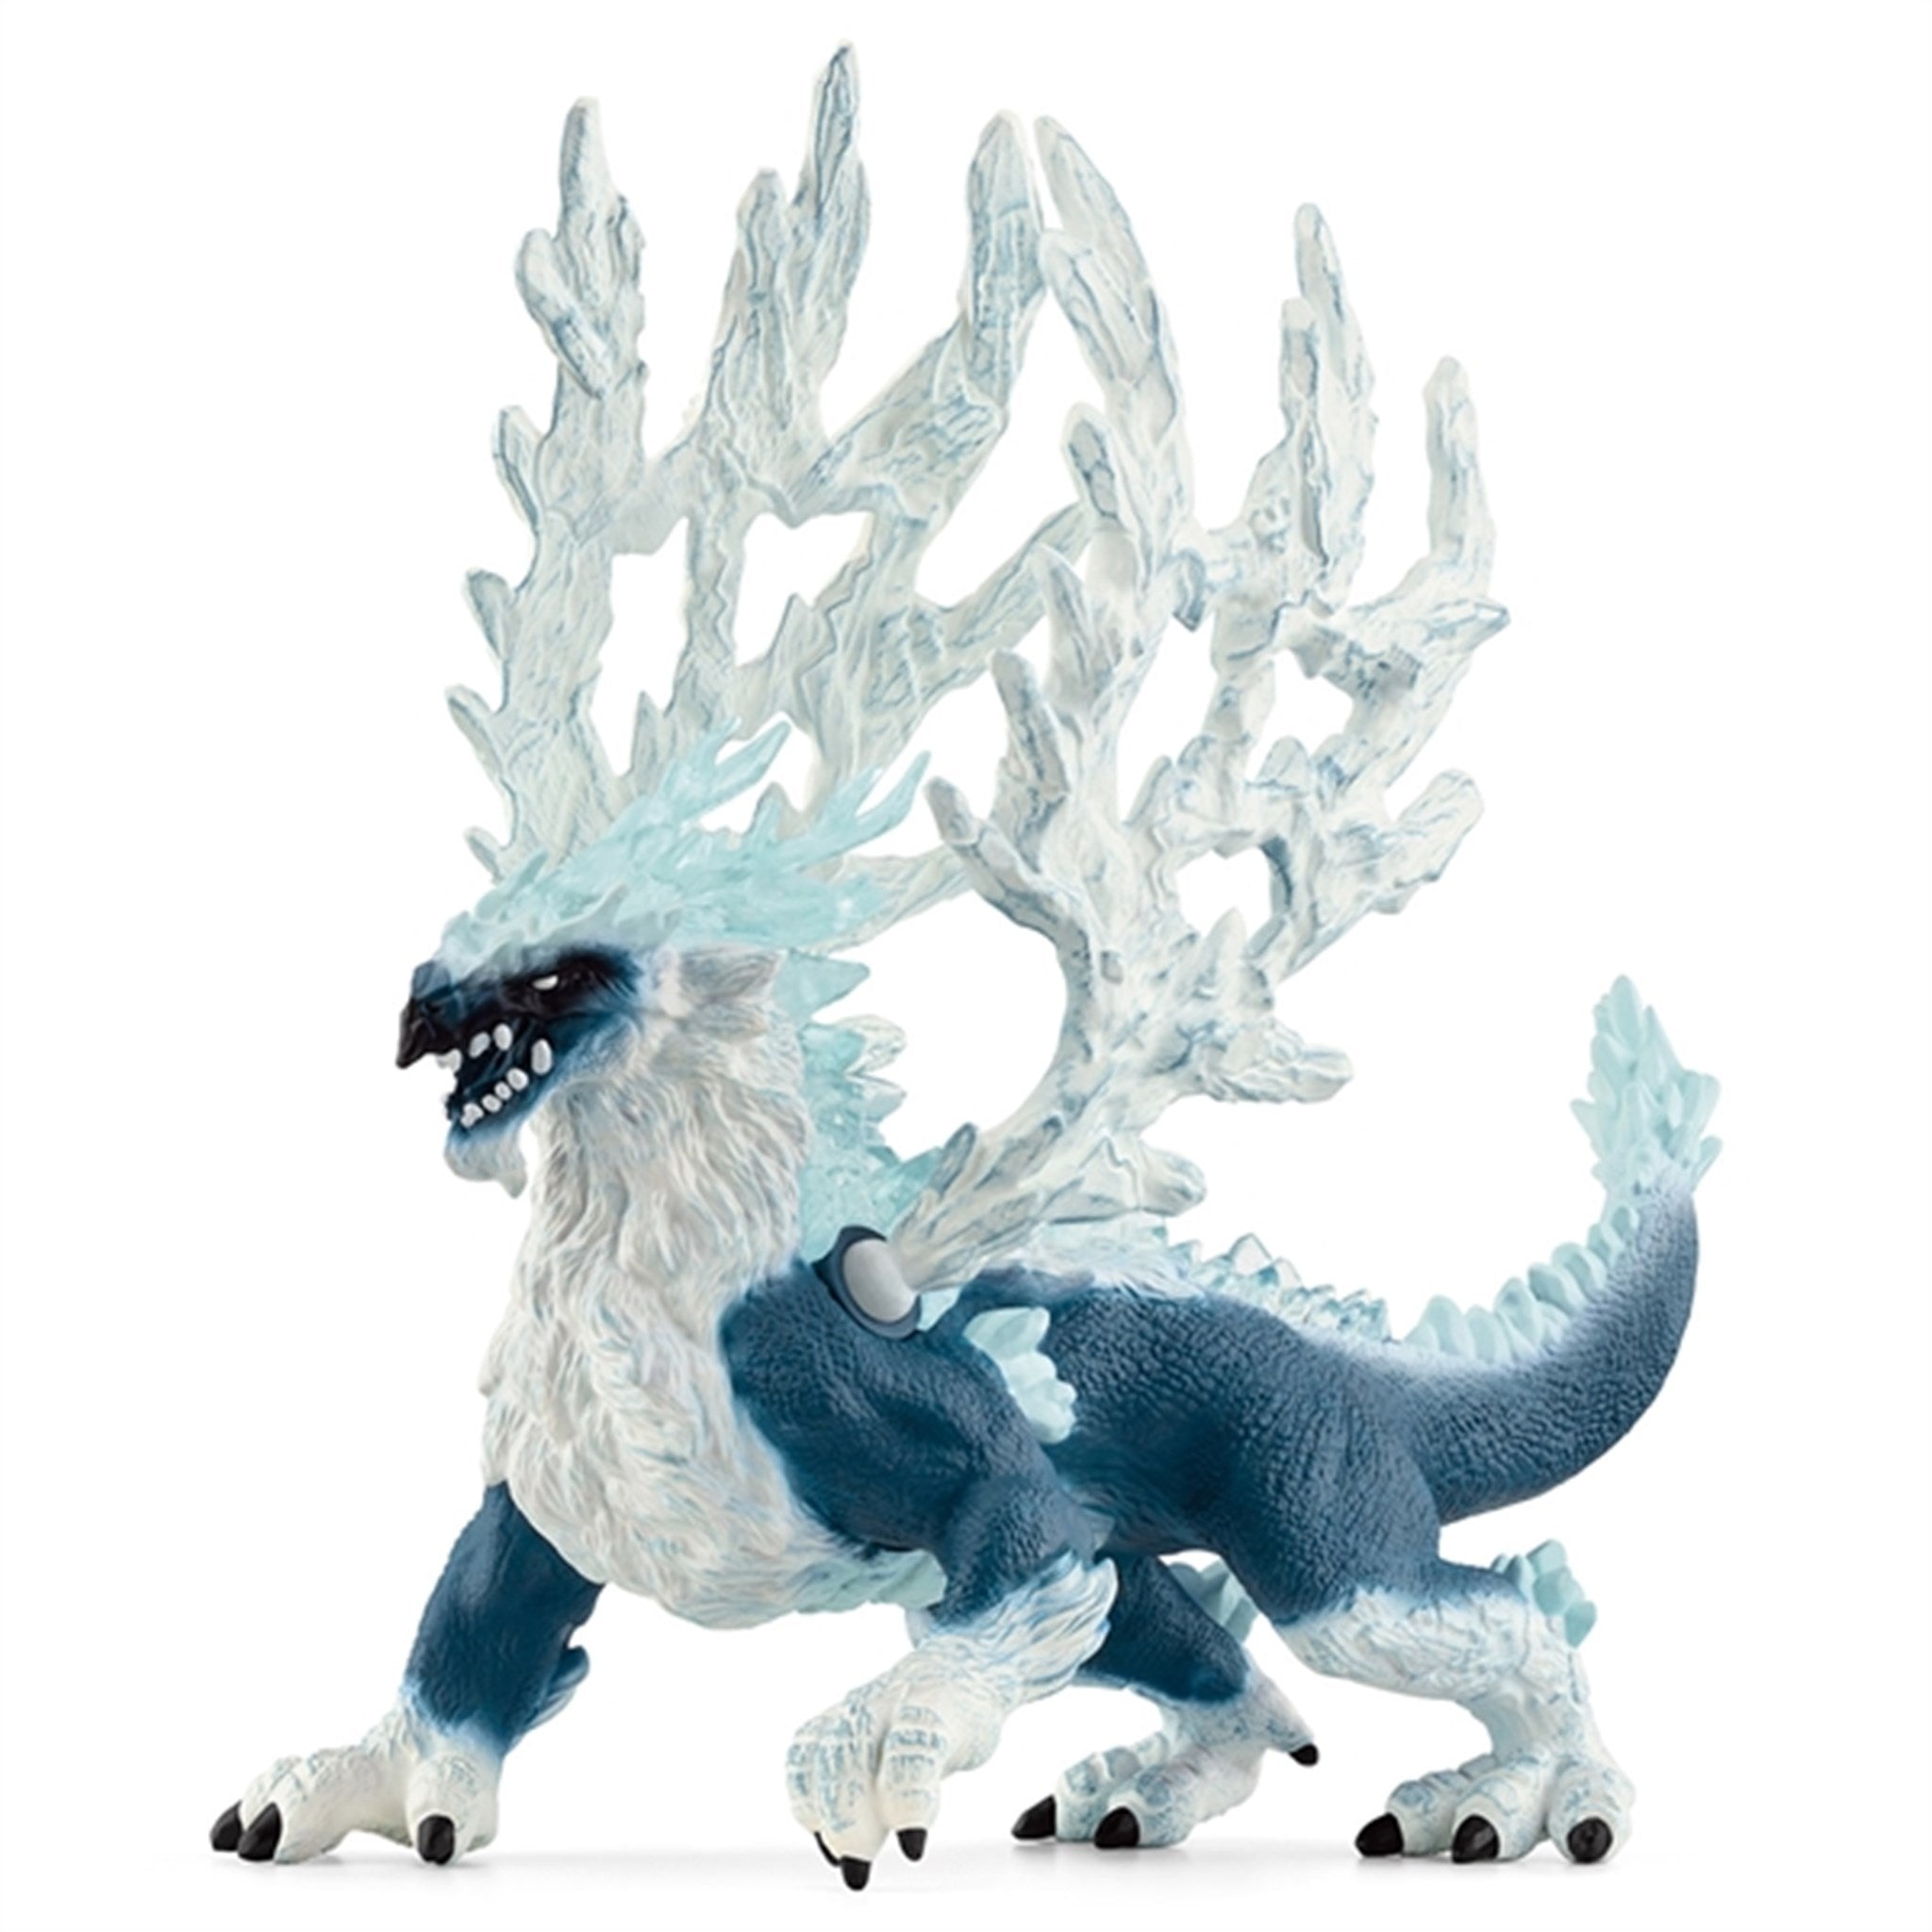 Schleich Eldrador Creatures Ice Dragon